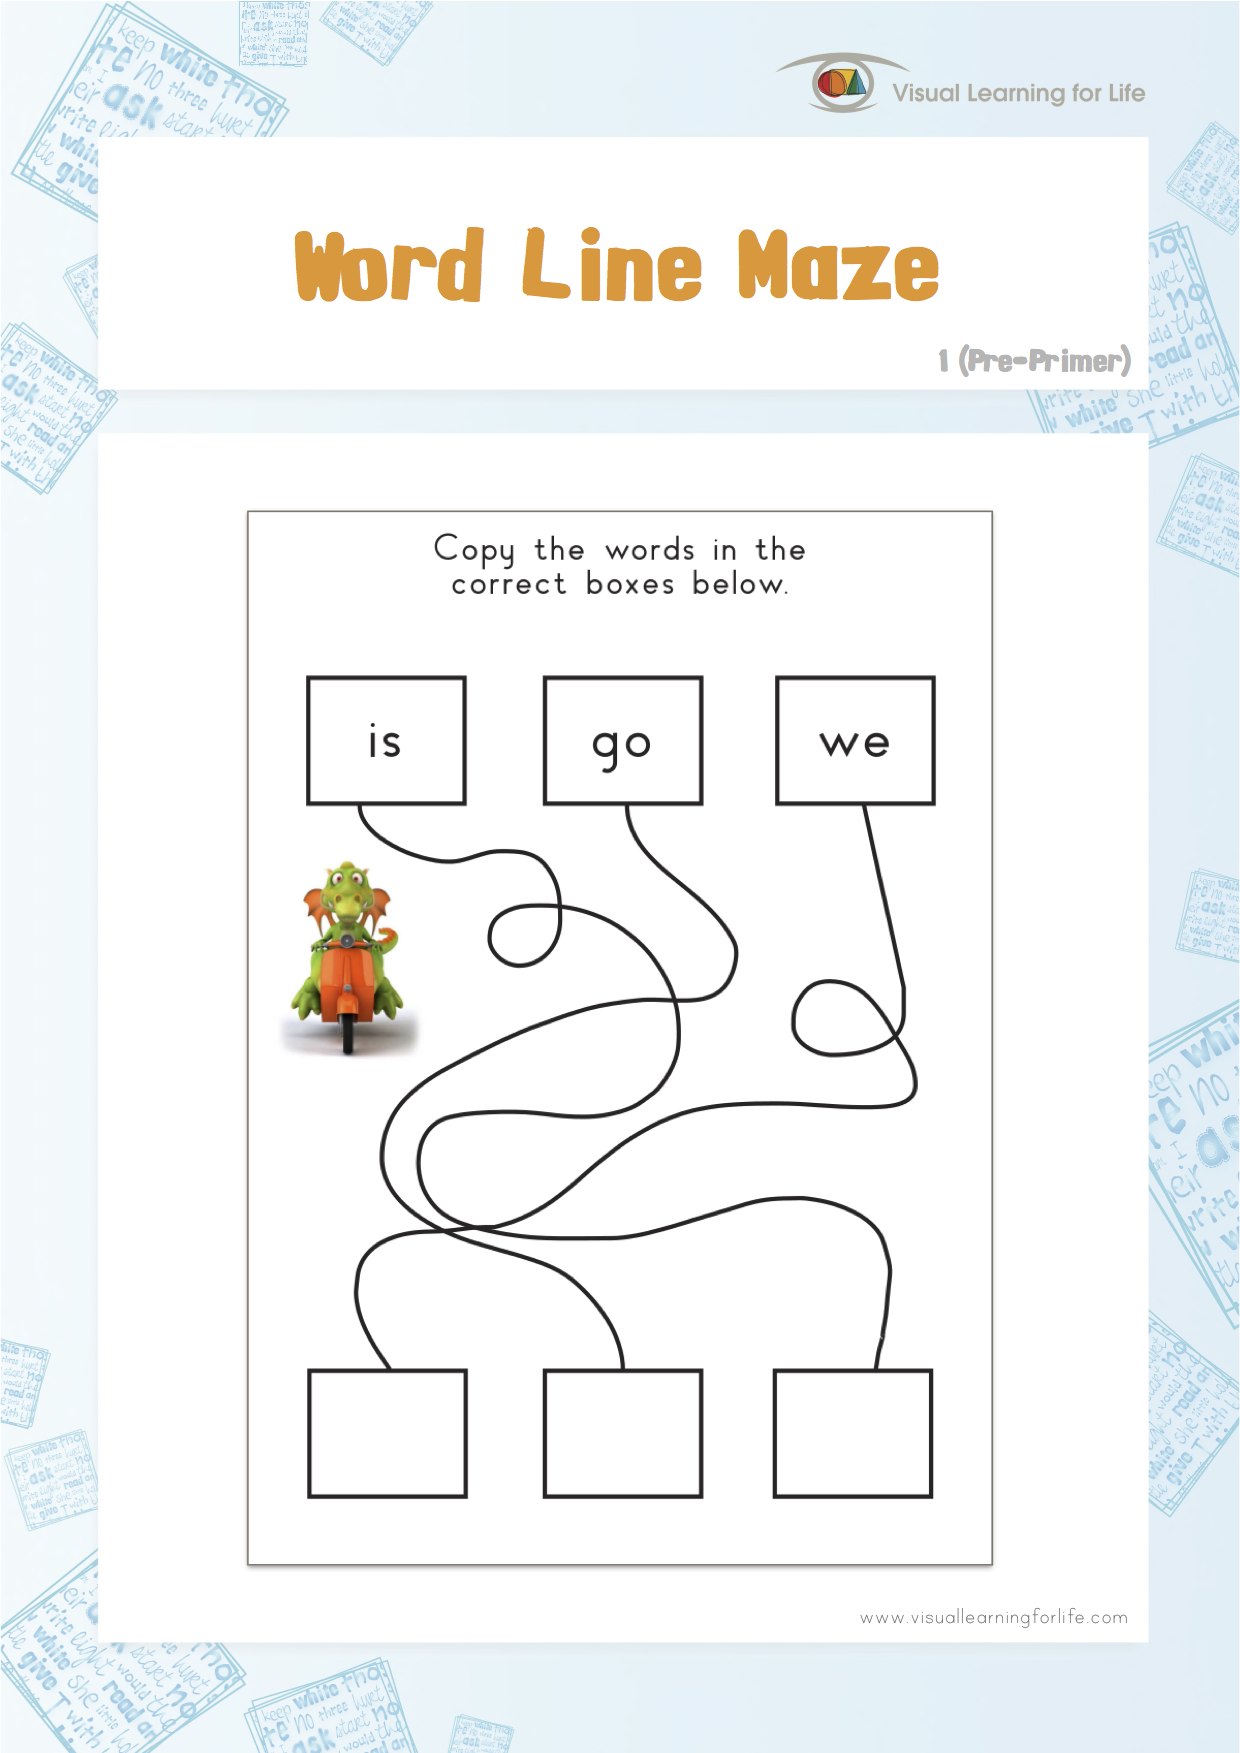 Word Line Maze 1